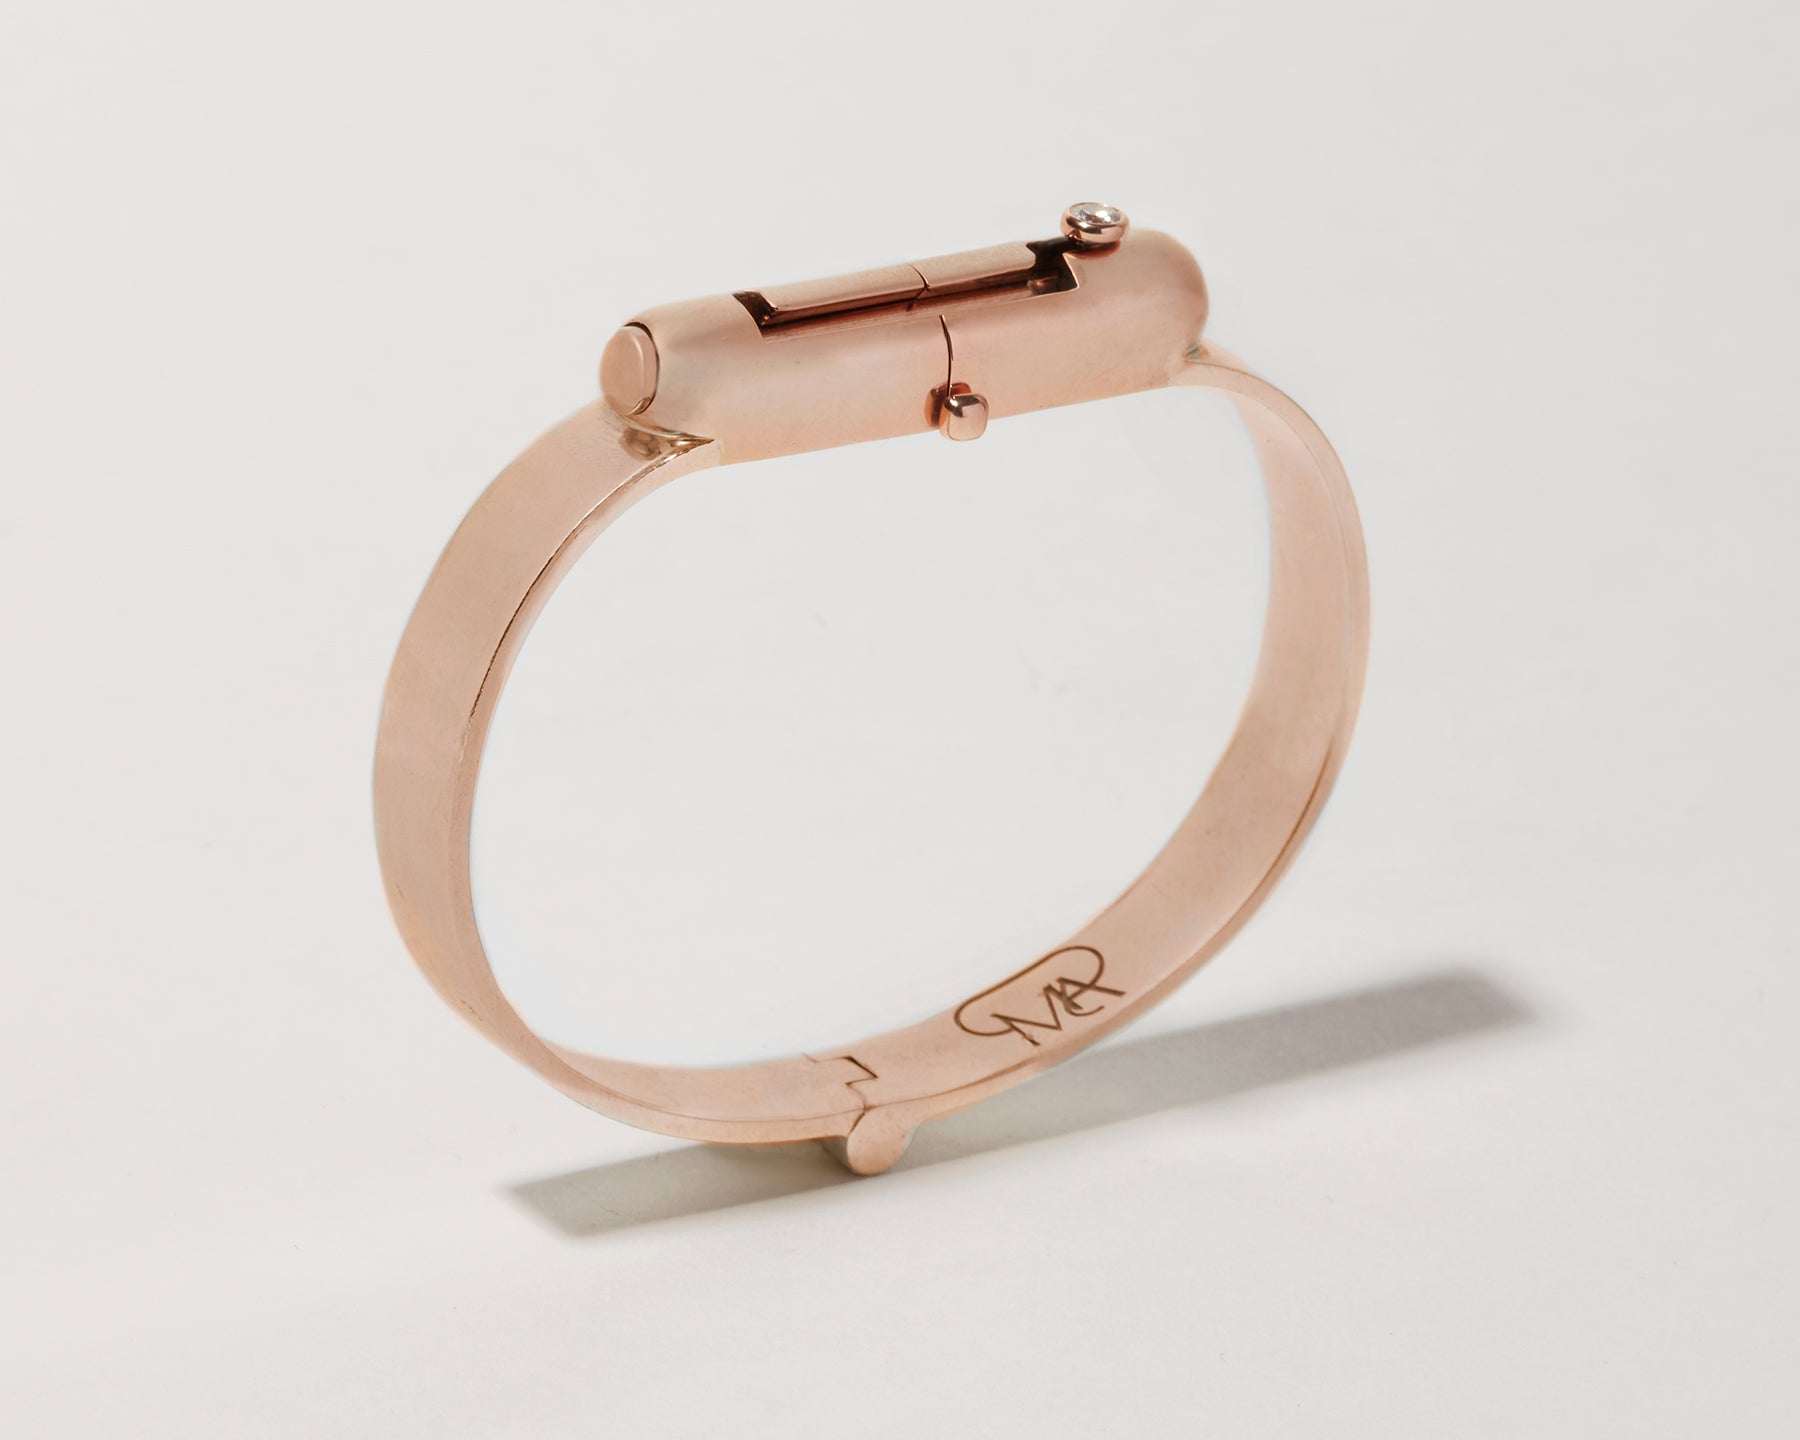 Angled front shot of rose gold clasp bracelet against white backdrop